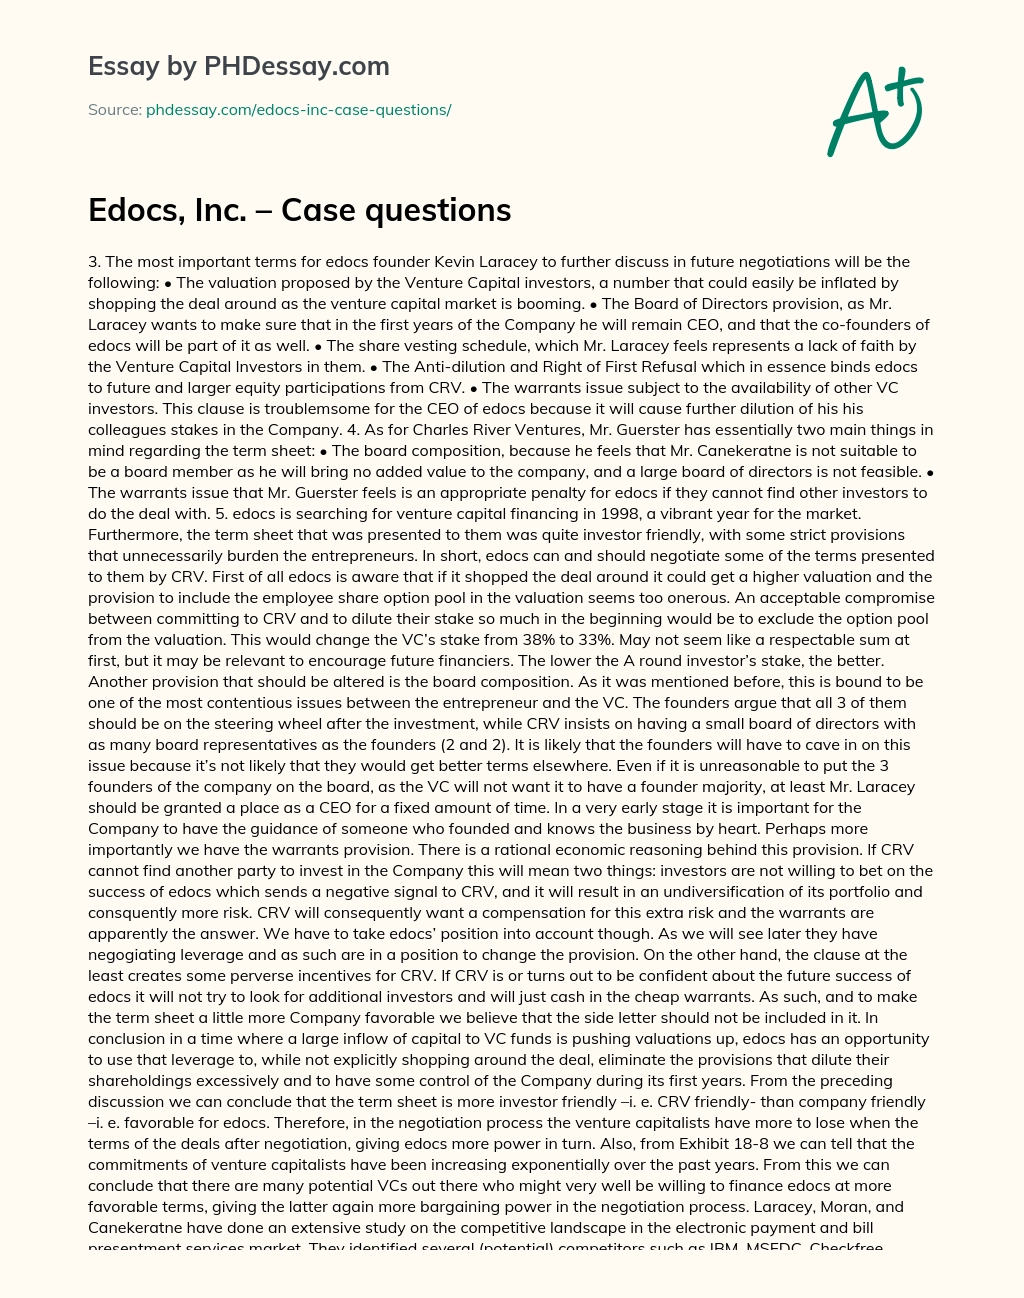 Negotiating Term Sheet Provisions for Edocs’ Venture Capital Financing in 1998 essay